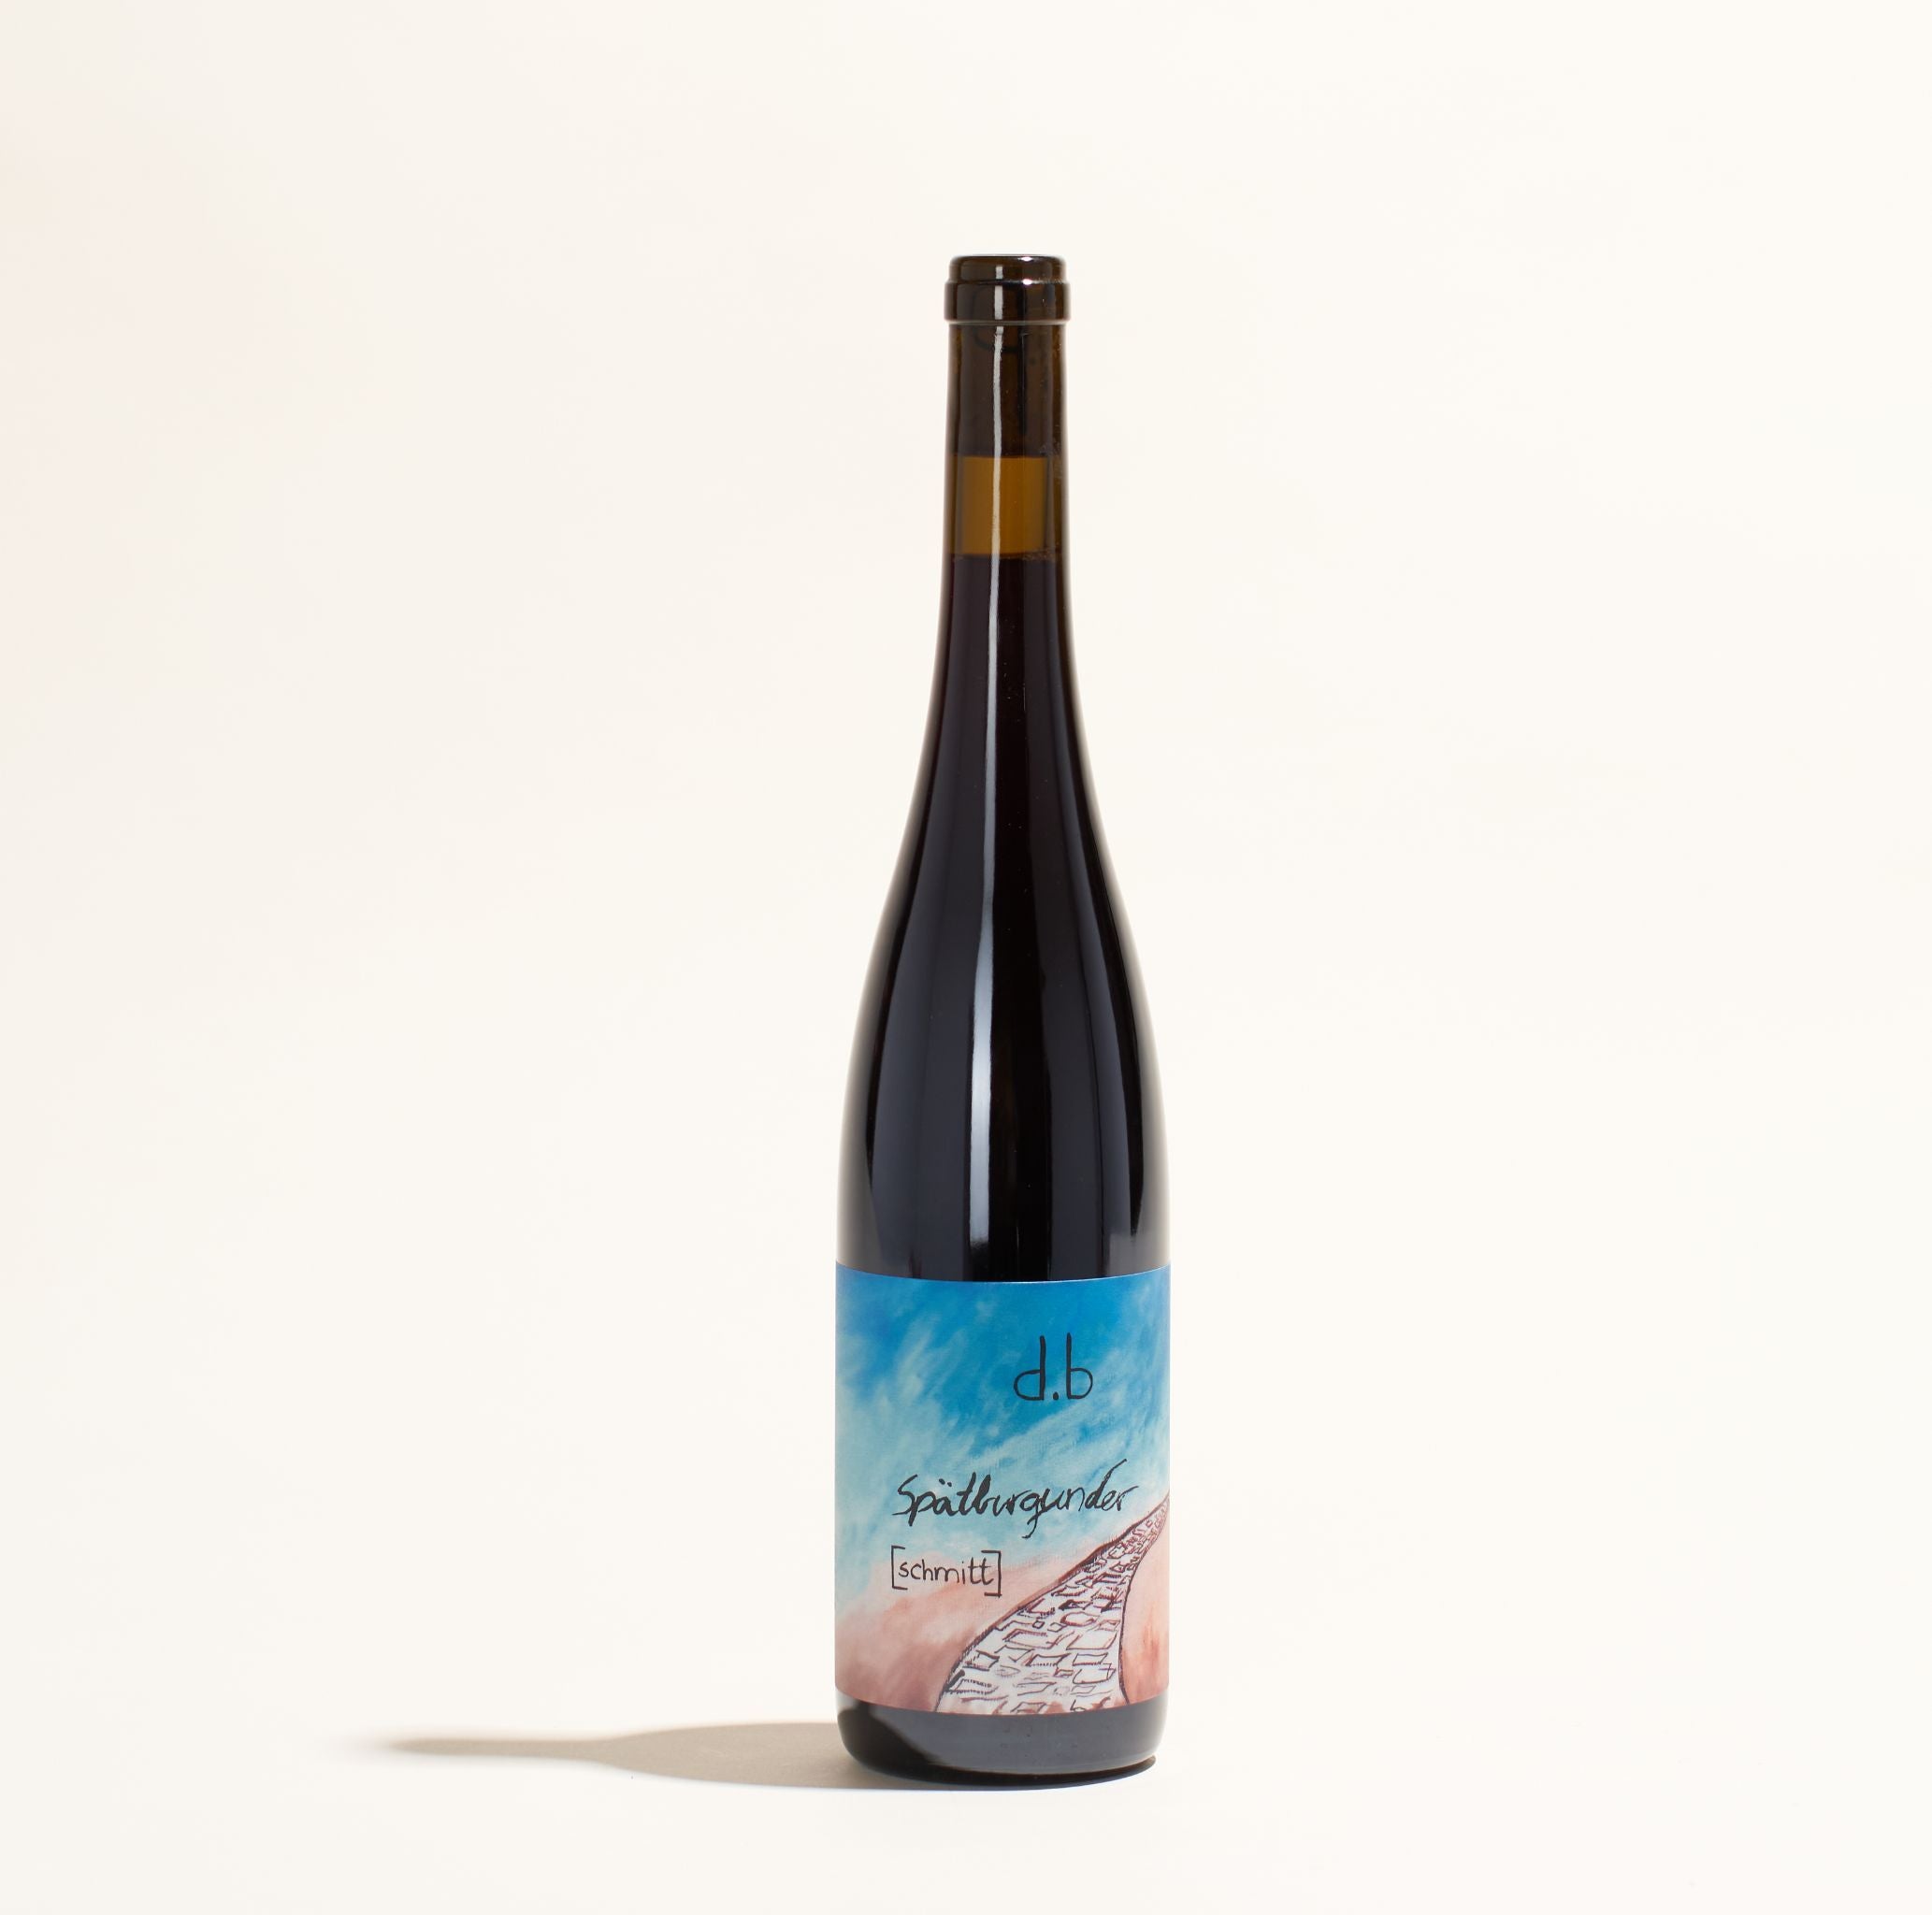 weingutt schmitt spatburgunder natural red wine germany front label